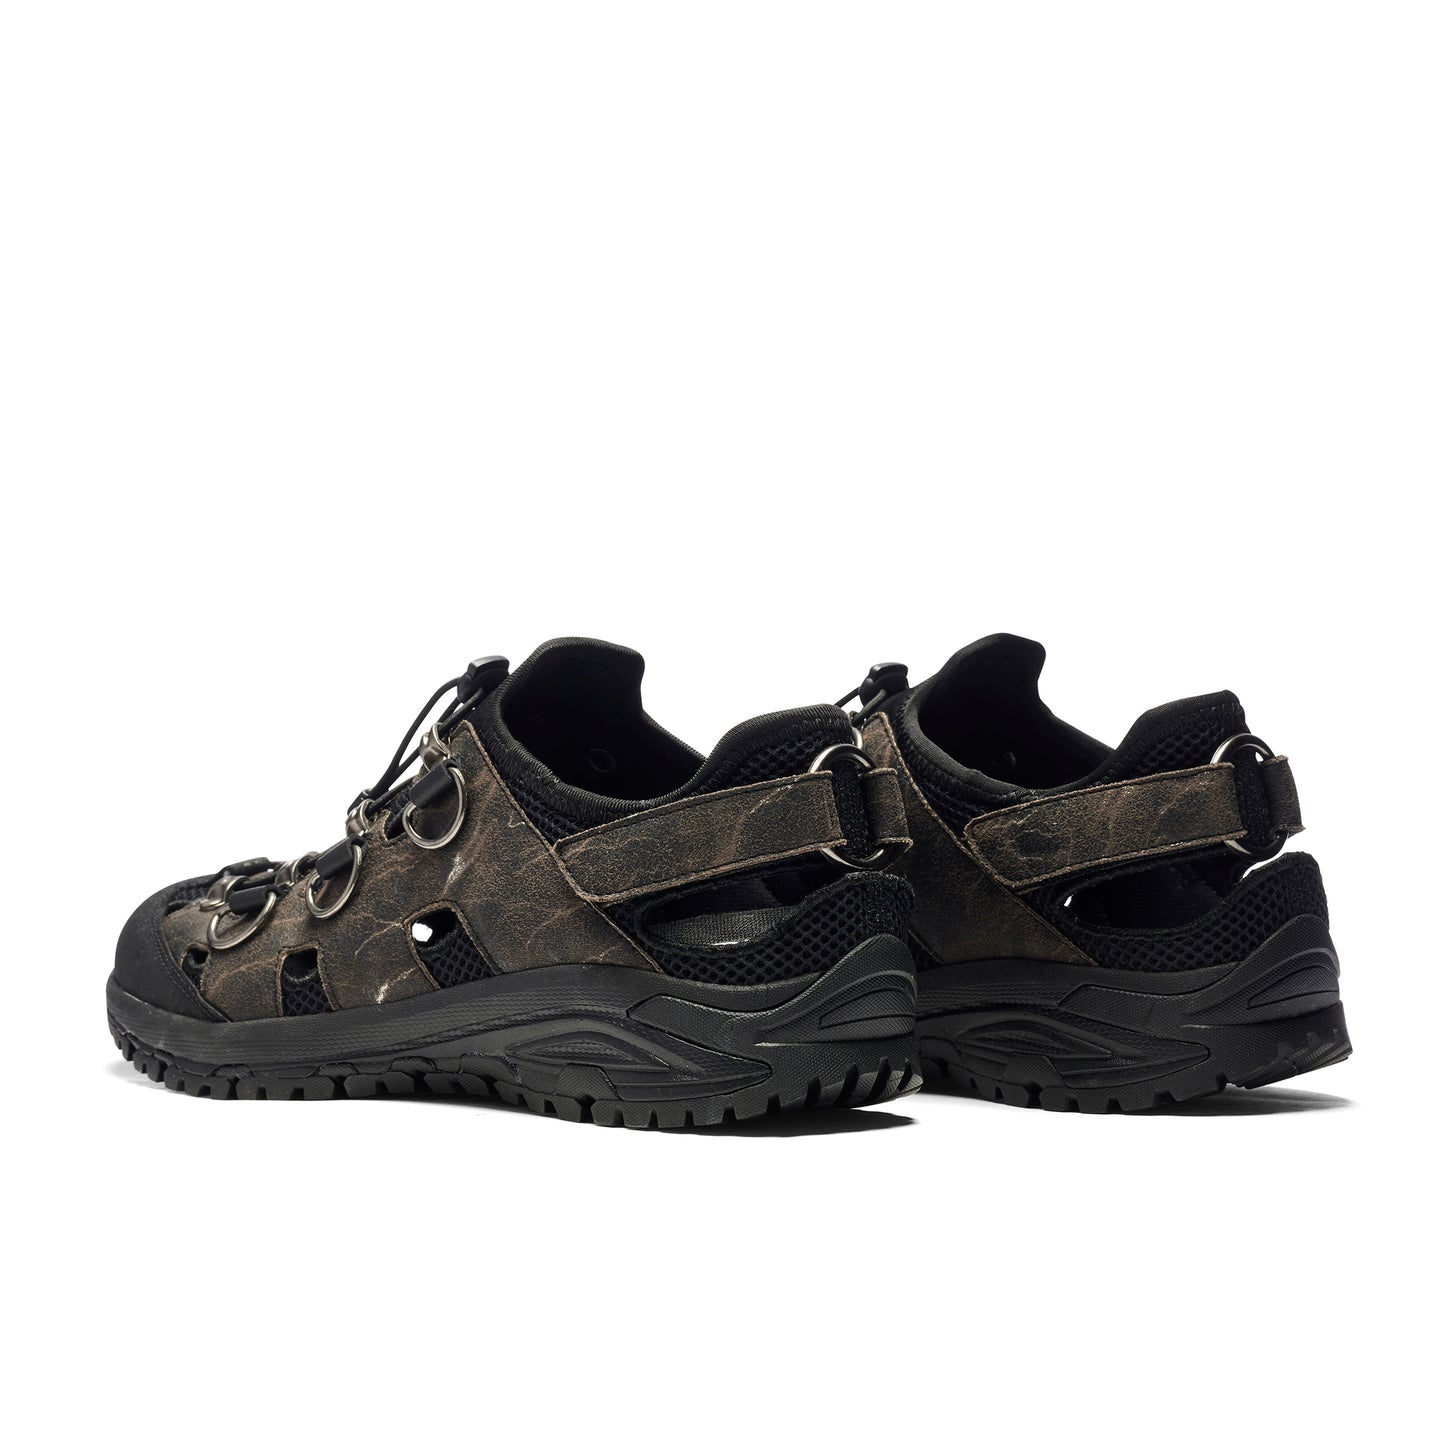 Apex Predator Men's Trail Hybrid Sandals - Grey - Koi Footwear - Back View